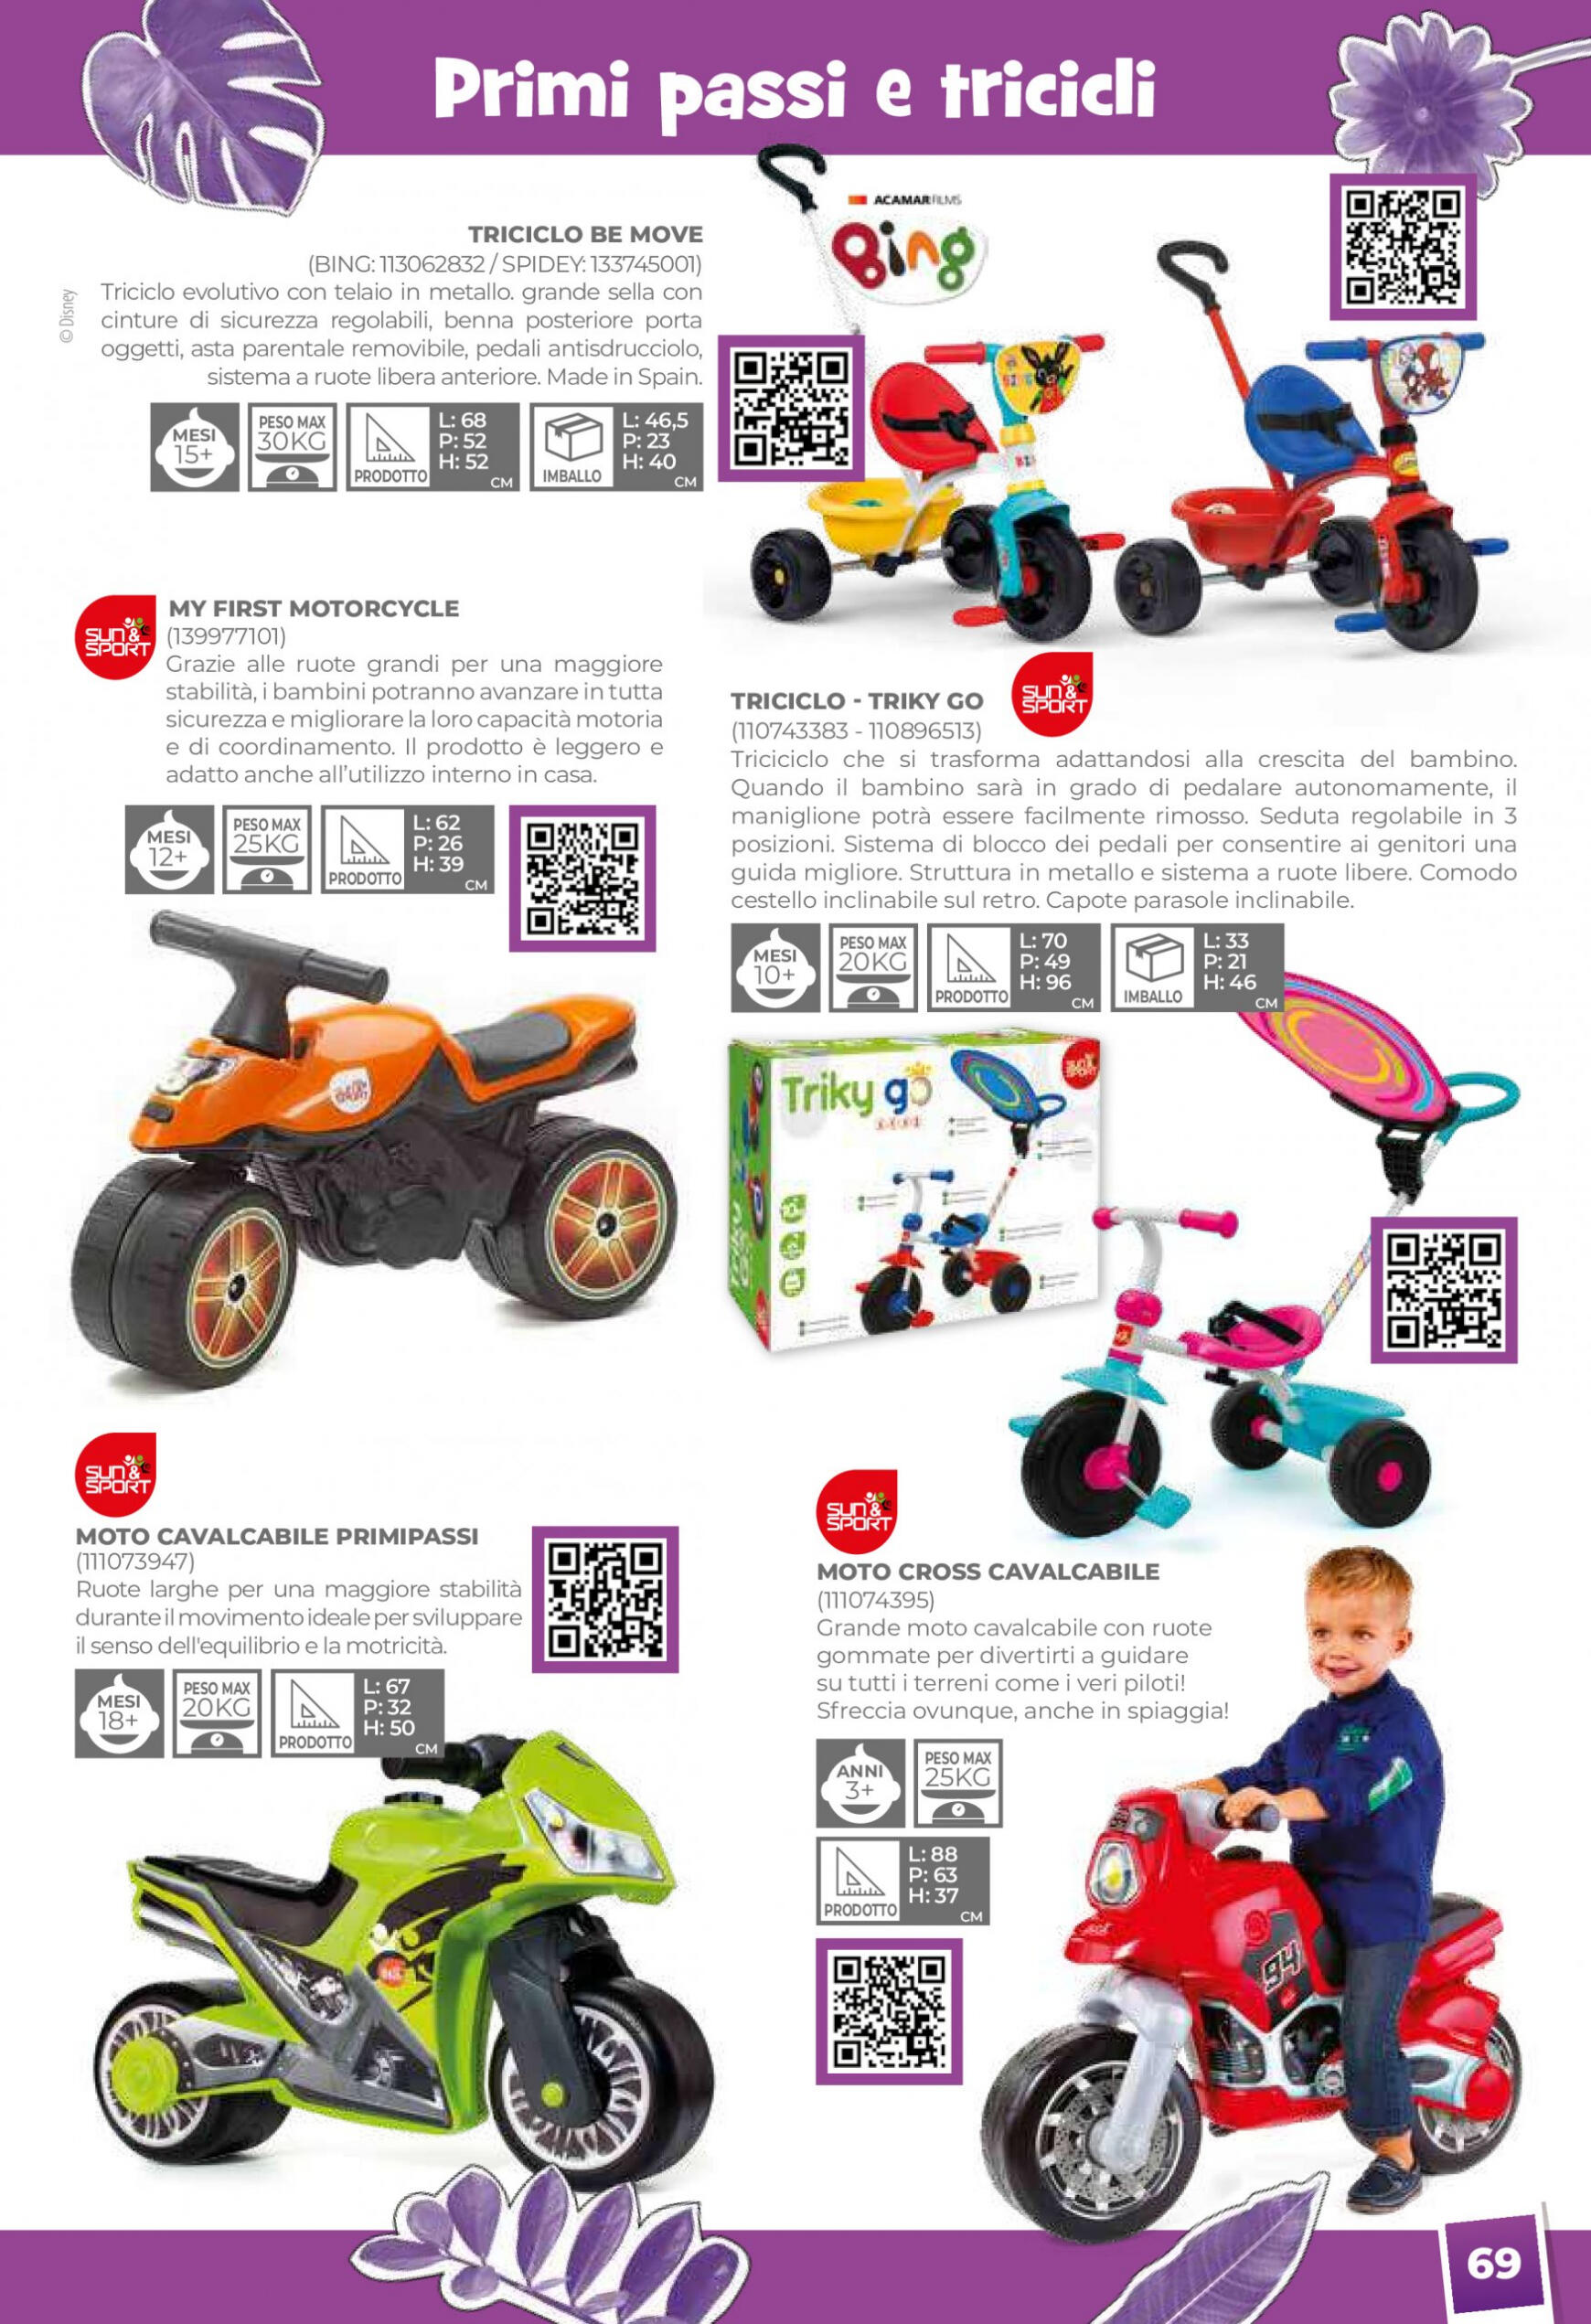 toys-center - Nuovo volantino Toys Center 01.05. - 31.12. - page: 71